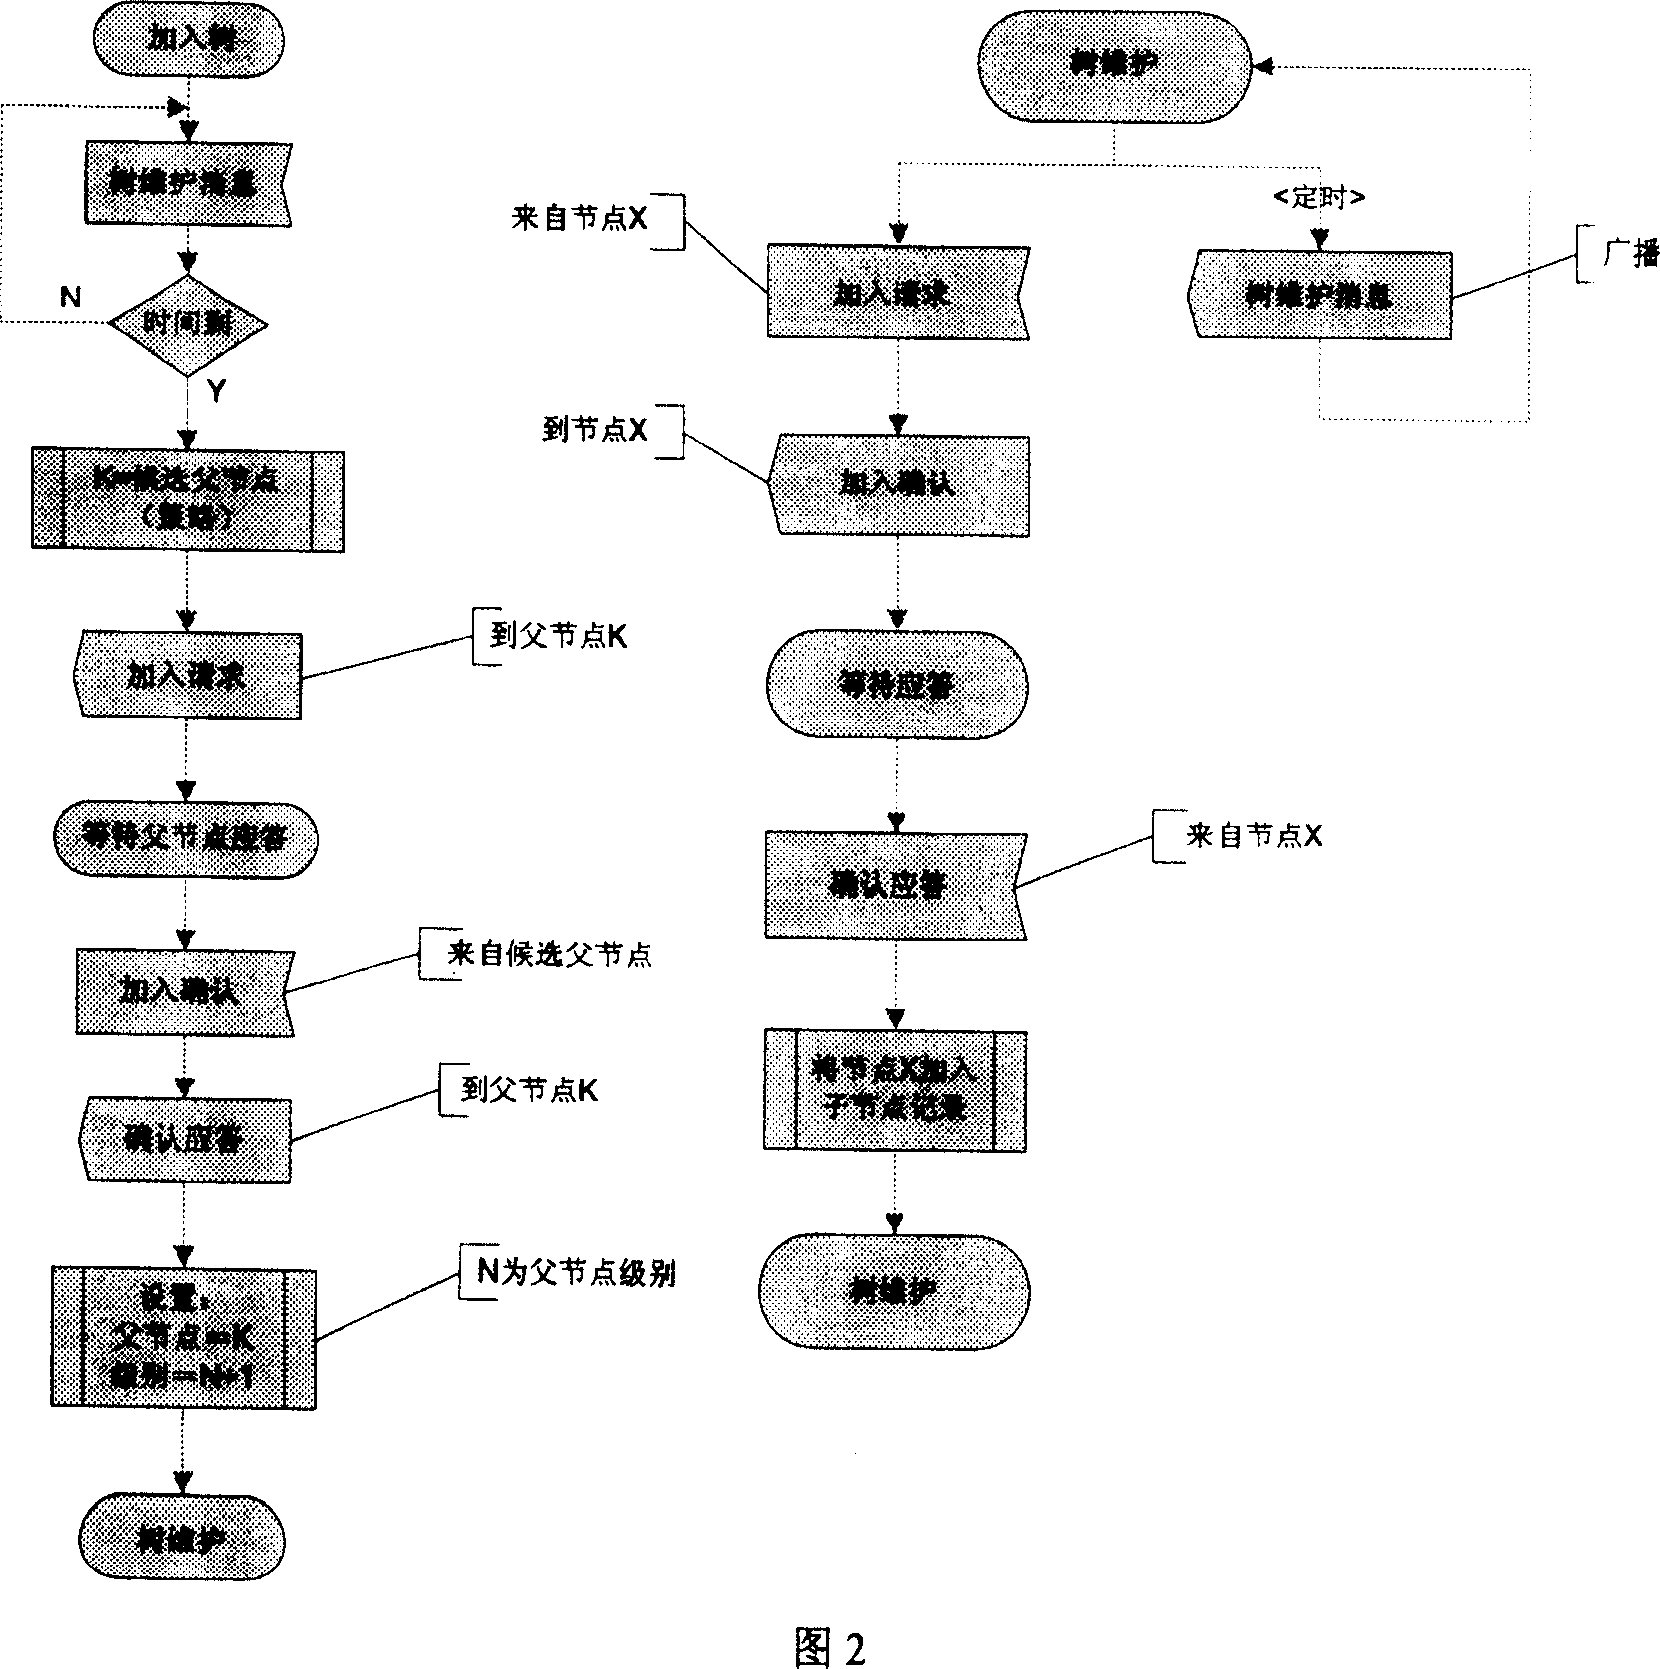 Nucleus tree self-organizing dynamic route algorithm